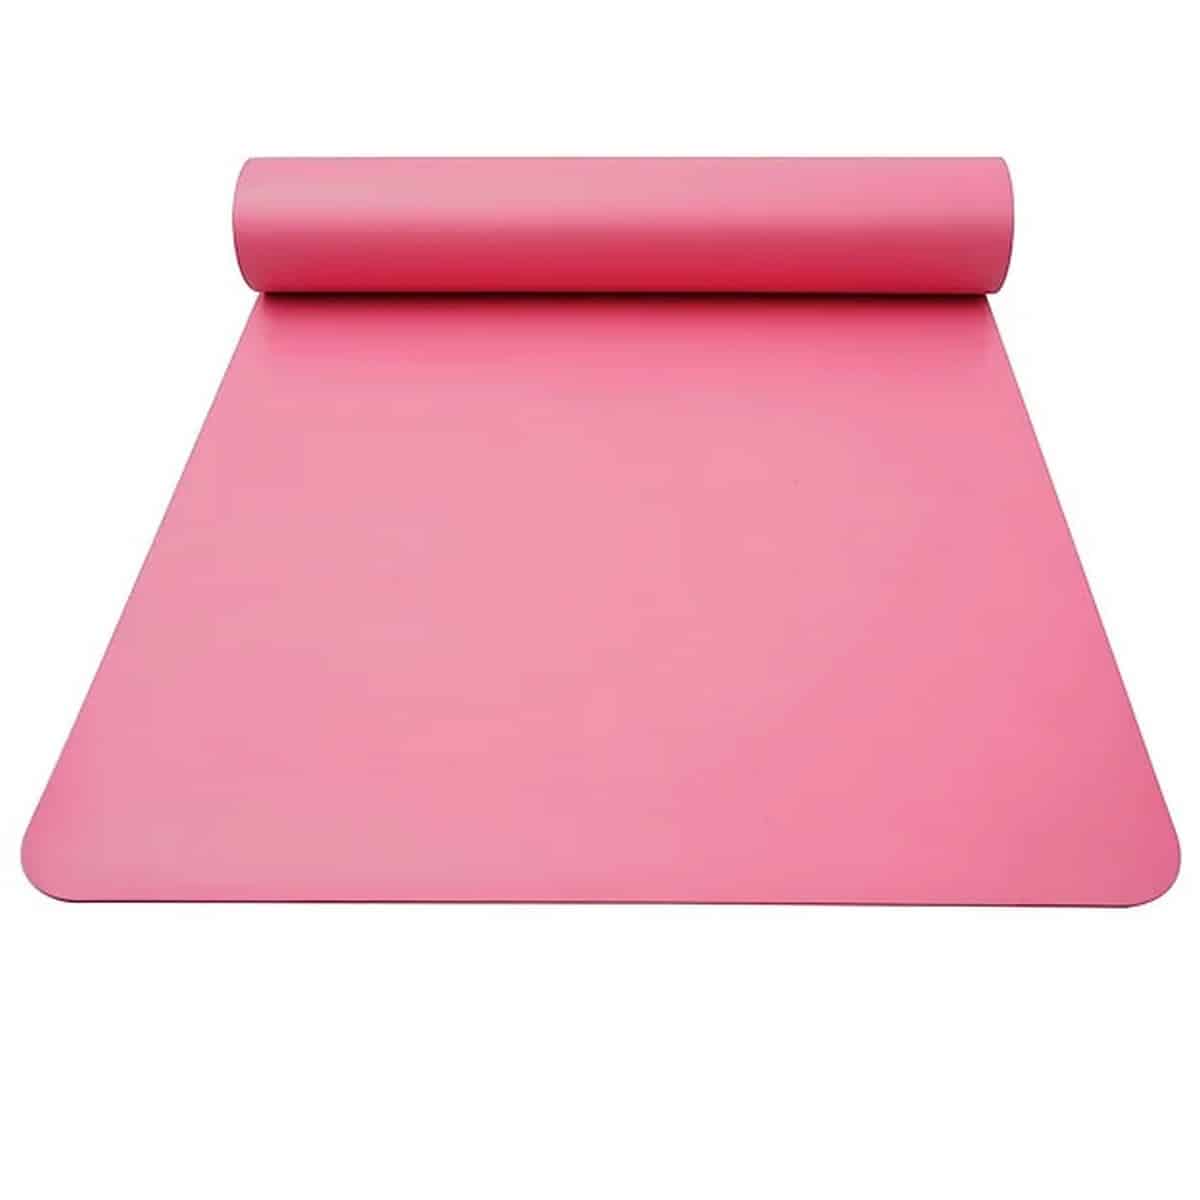 Gravolite Rubber Yoga Mat Online